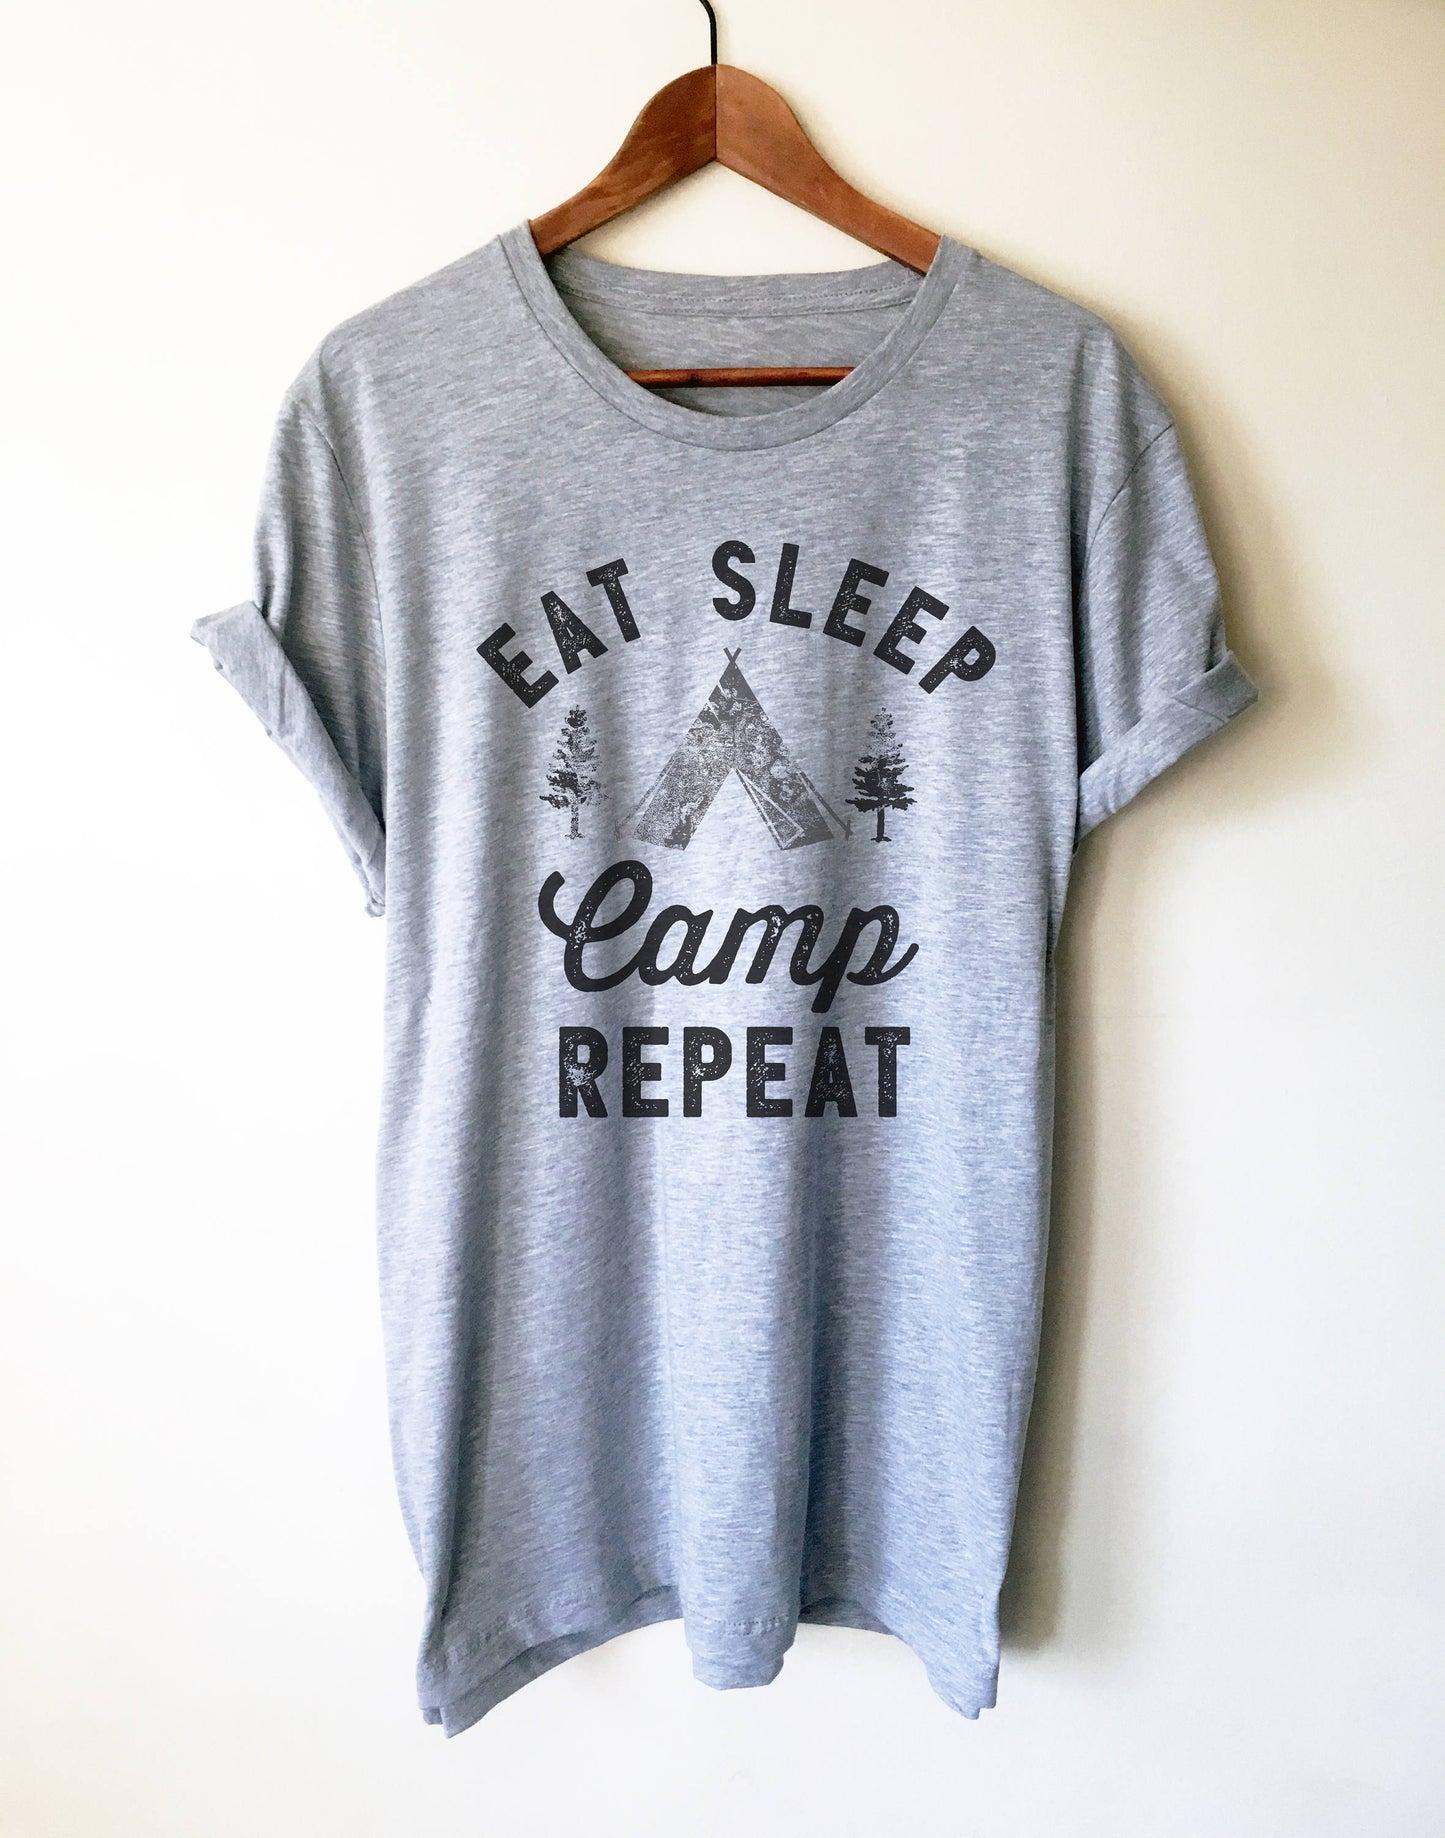 Eat Sleep Camp Repeat Unisex Shirt - Camping shirt, Happy camper shirt, Happy camper, Camping, Hiking shirt, Camping gift, Camp shirt